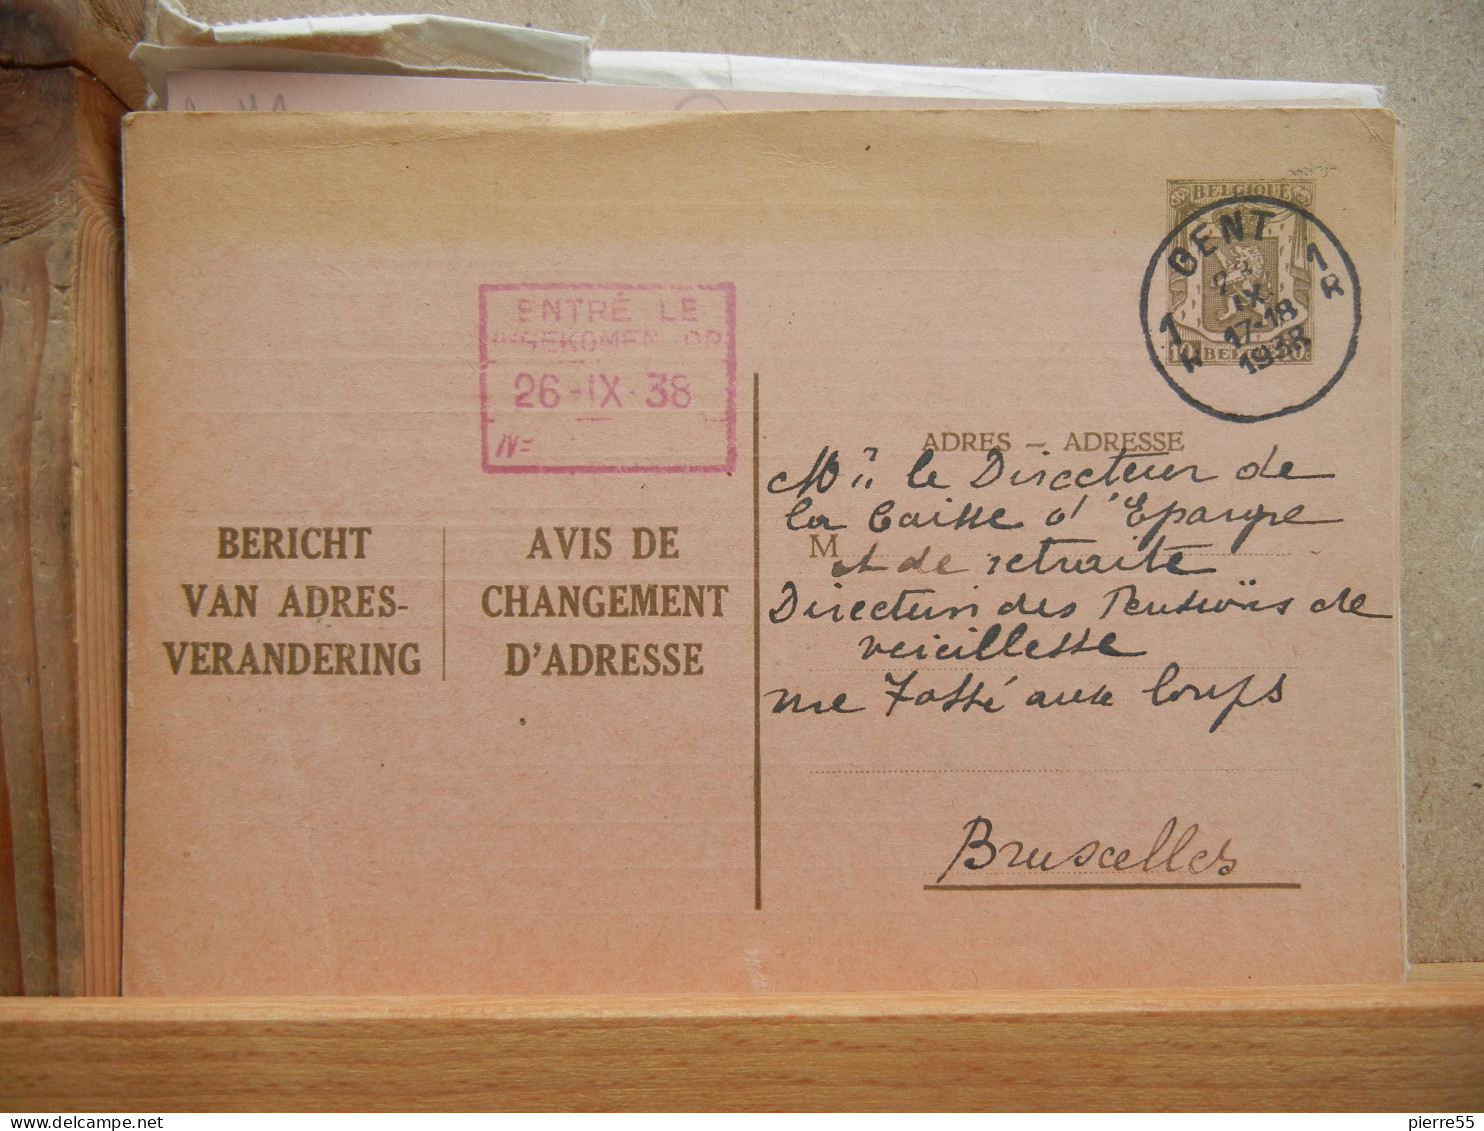 EP - Avis Changement Adresse - 10c Vert Lion Héraldique Oblit Gent 1938 + Cachet Date Rentree + Cachet CGER - Avviso Cambiamento Indirizzo